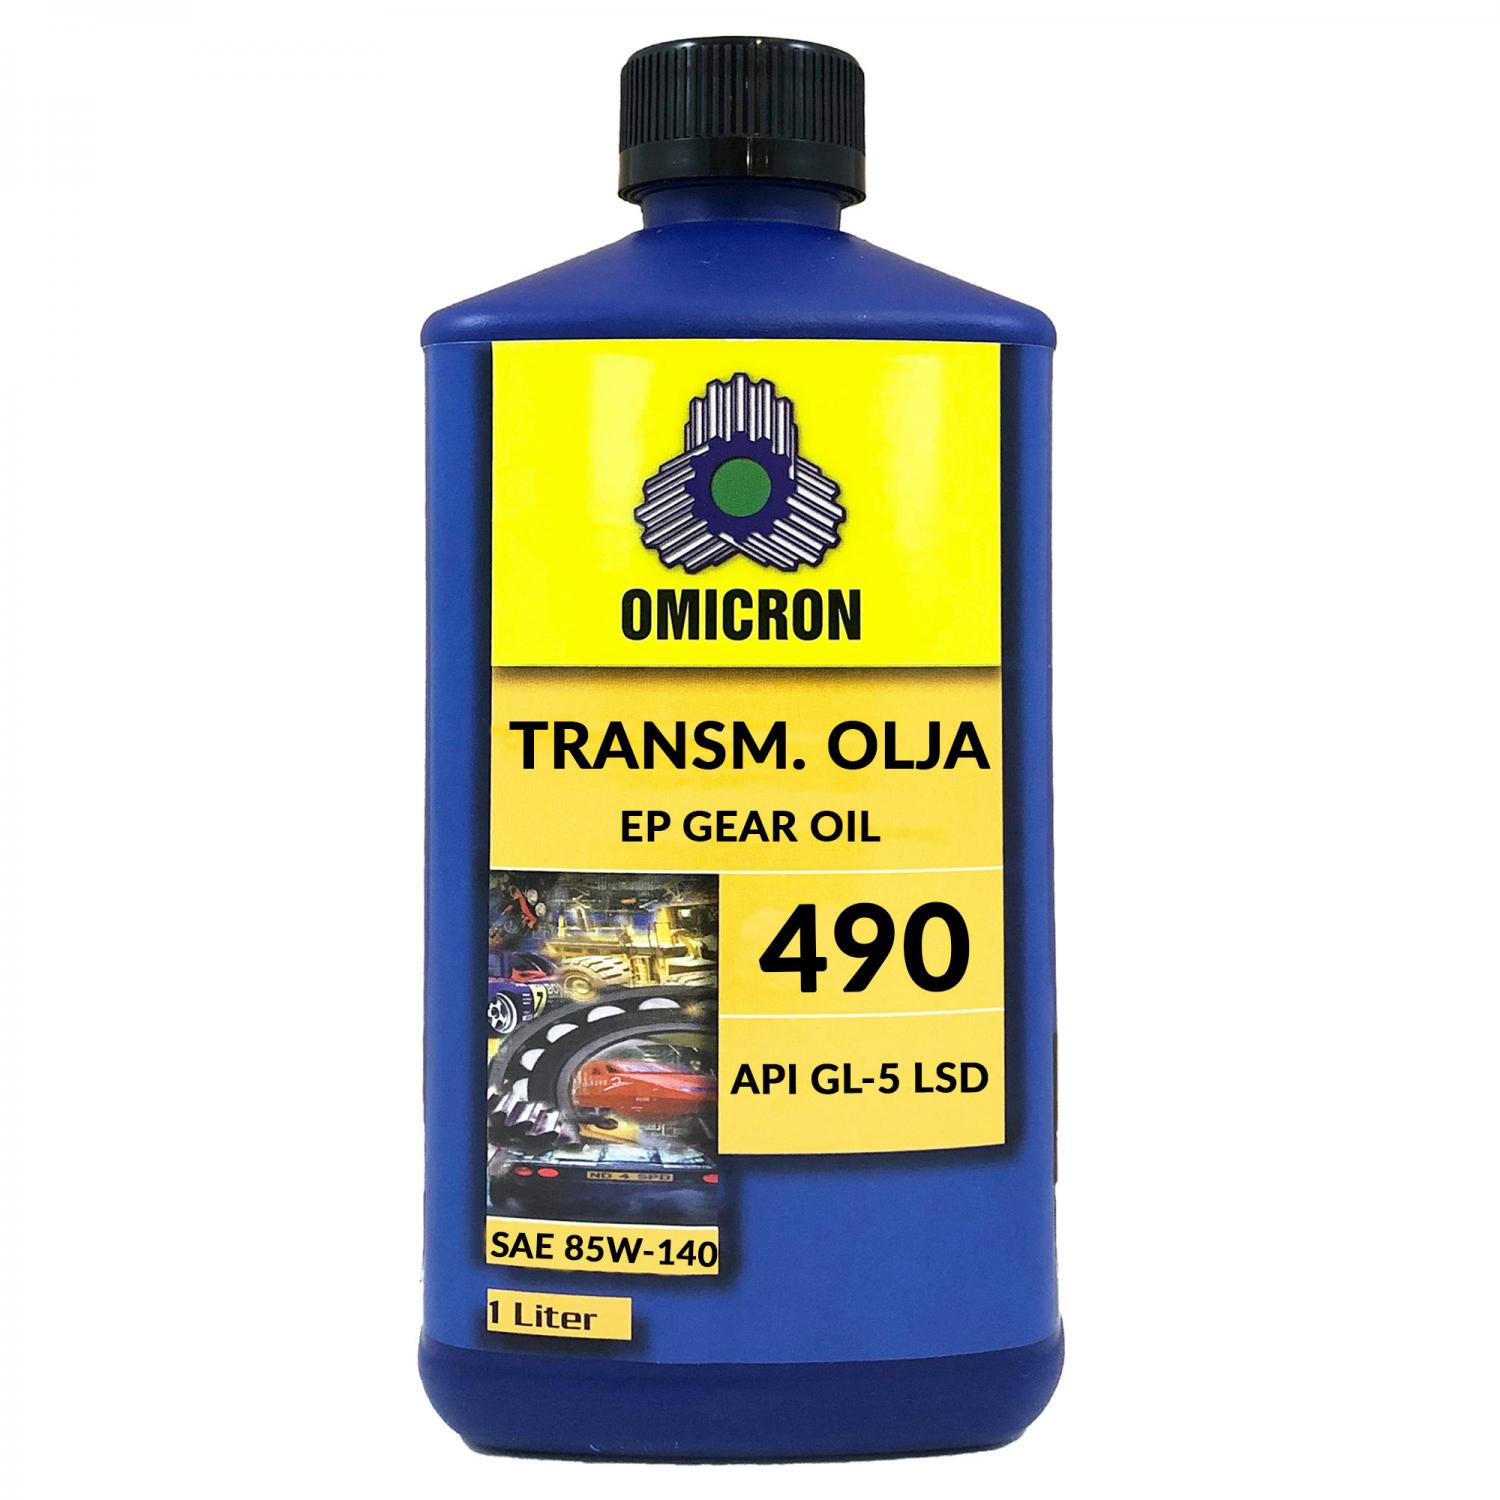 Omicron 490 SAE 85W-140 Transmissionsolja API G...